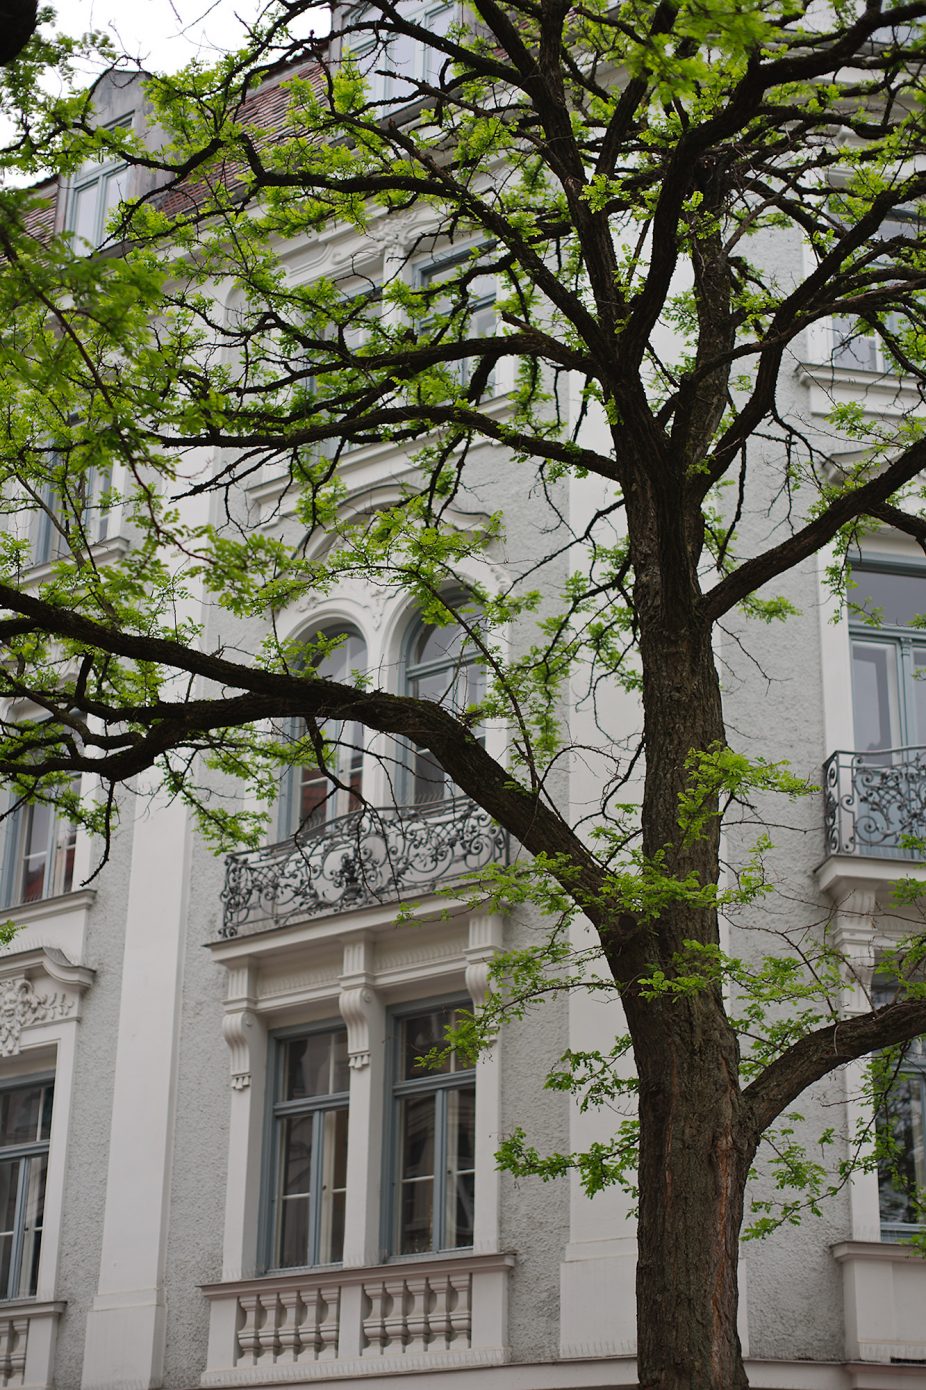 City Tree. Tagged with Lens, Minolta 1.2 58mm, Urban